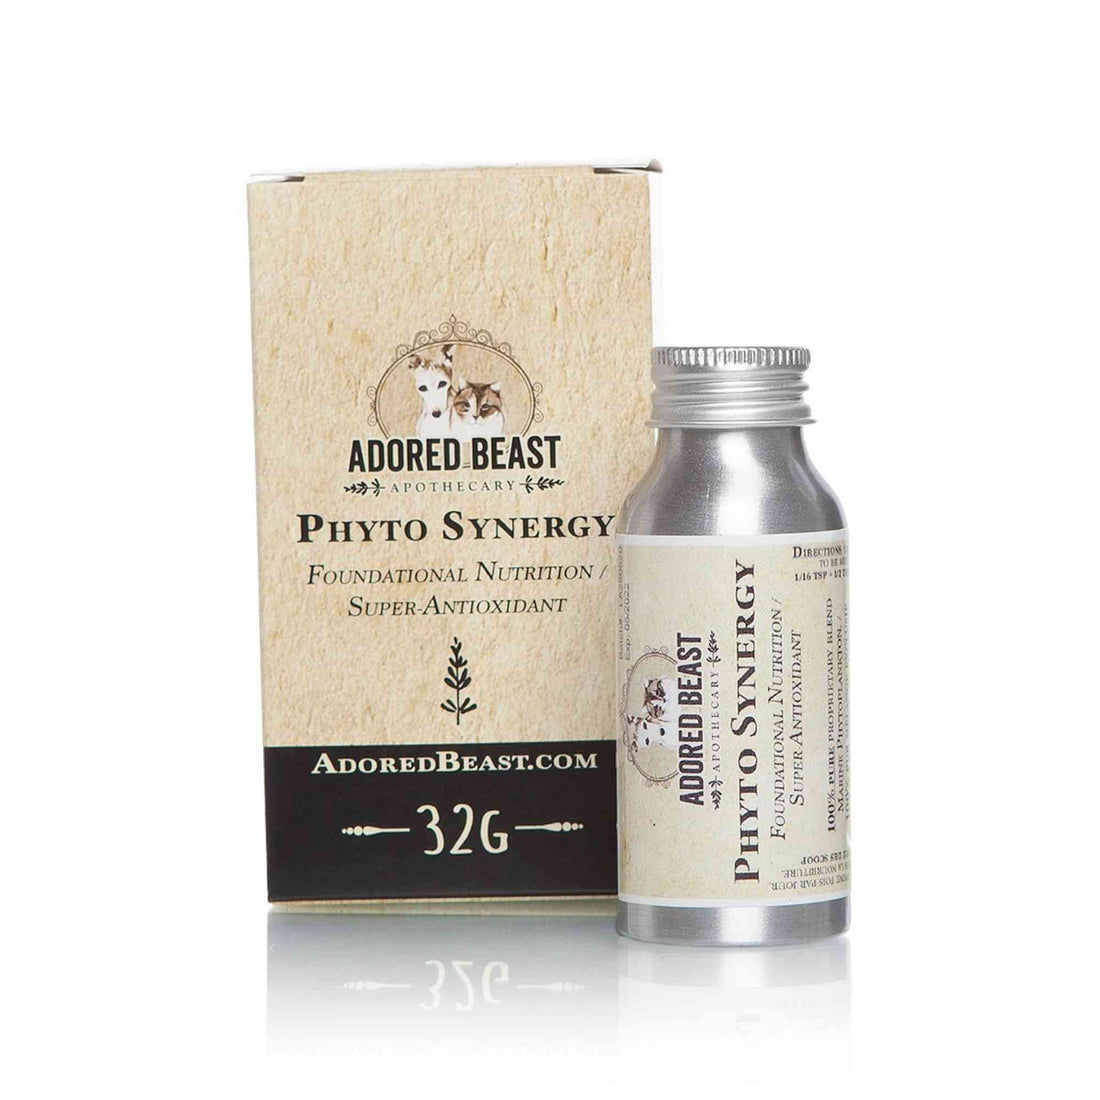 Phyto Synergy 32g Adored Beast Super Antioxidant